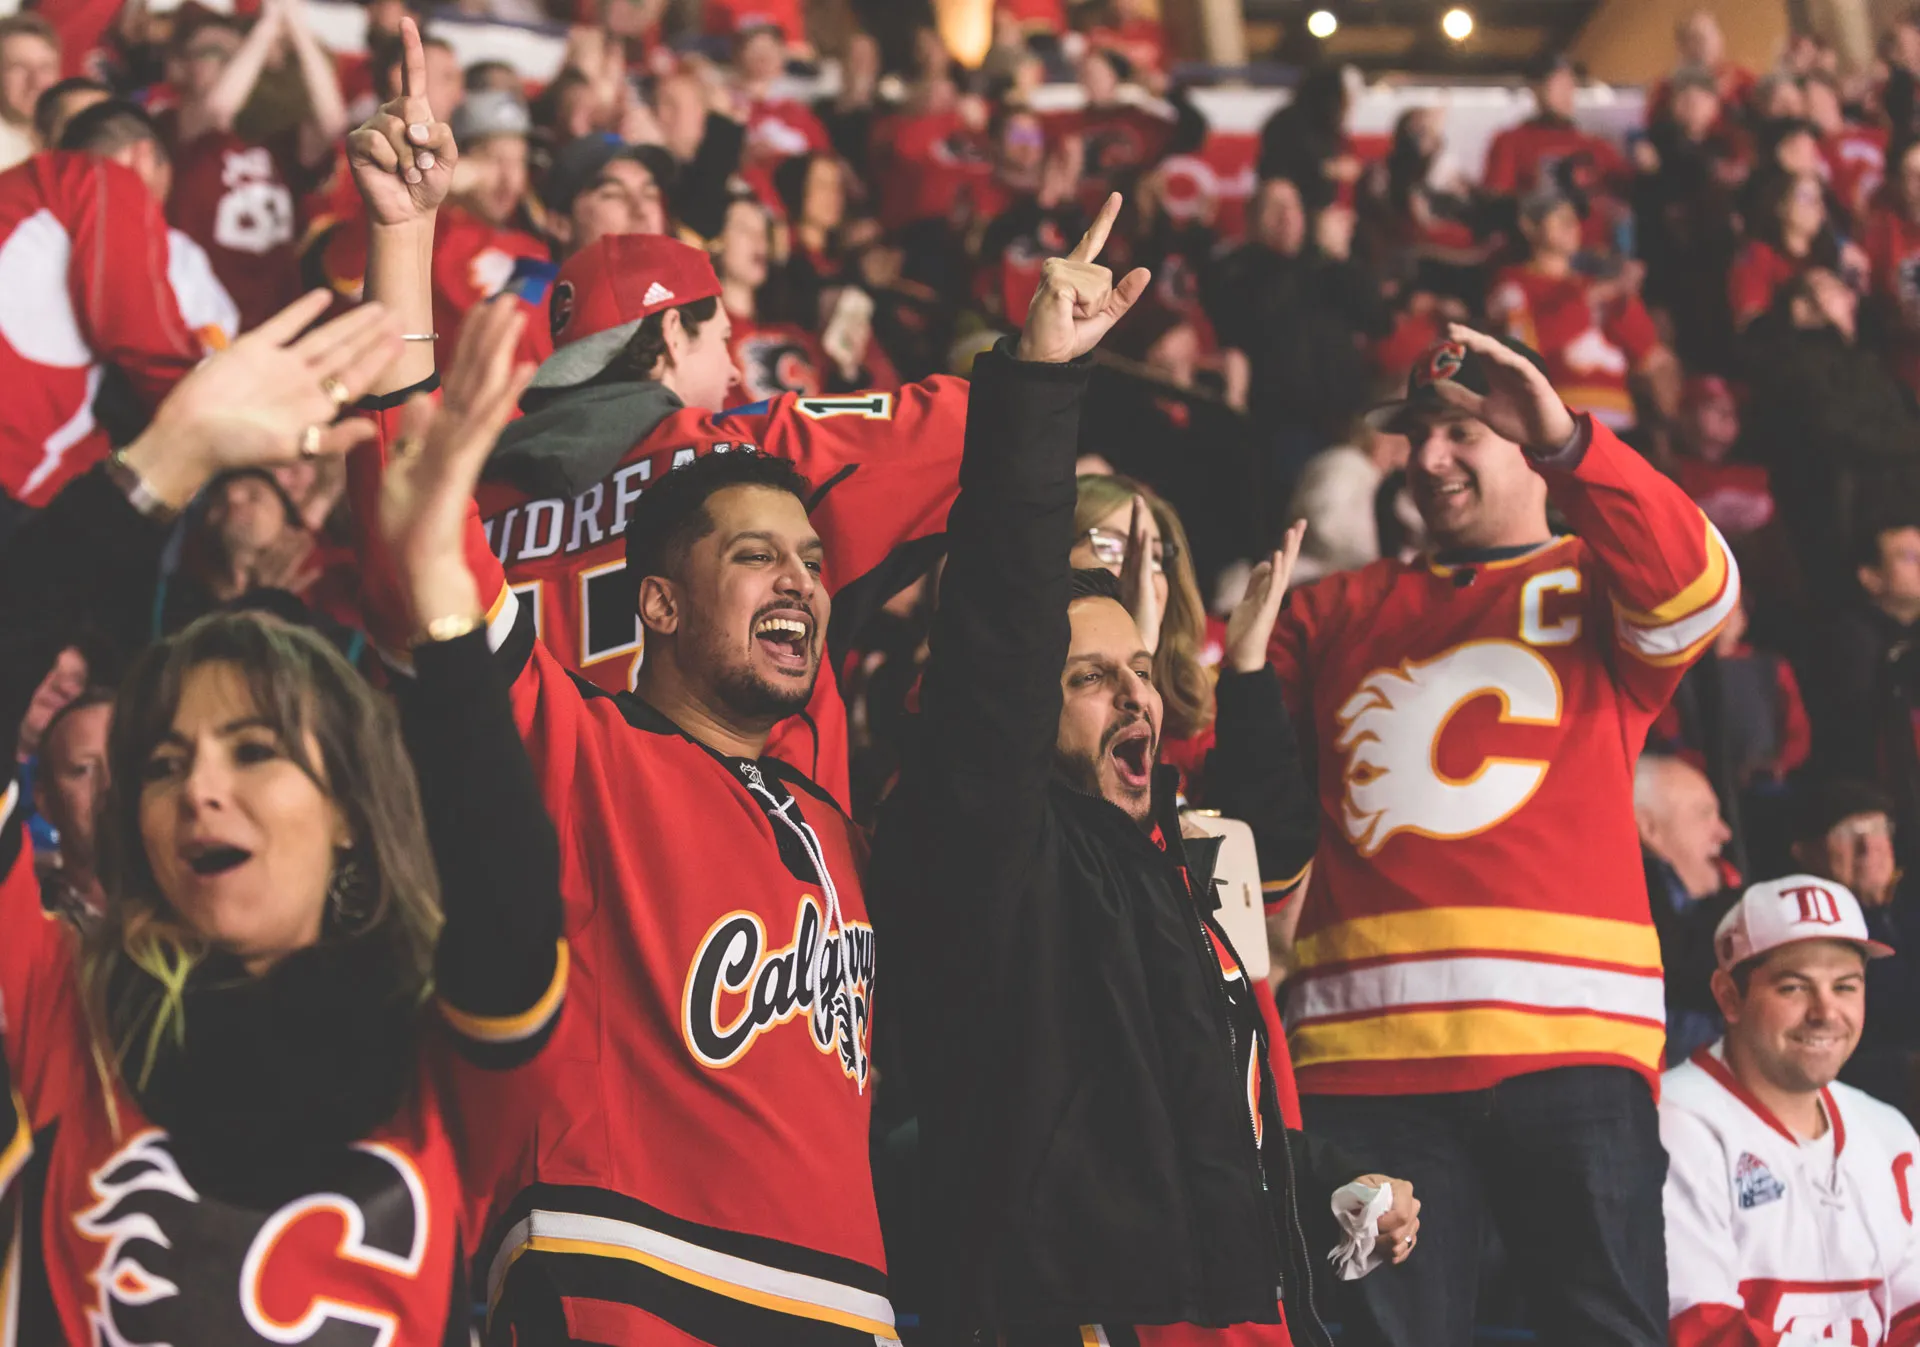 Cheer on the Calgary Flames at the Scotiabank Saddledome.